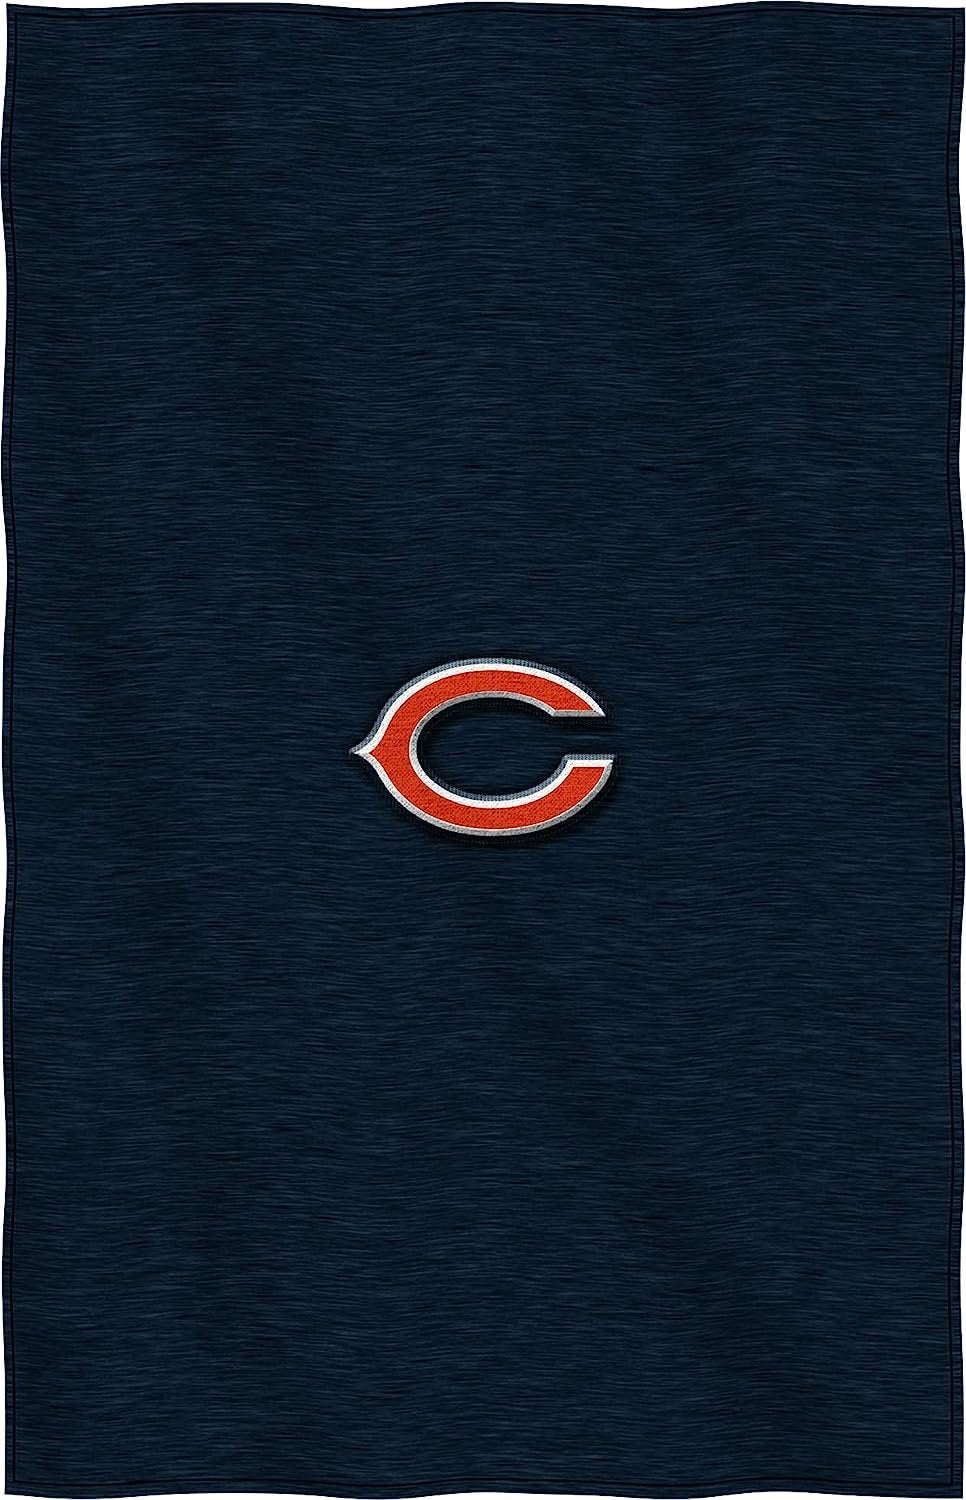 Chicago Bears Throw Blanket, Sweatshirt Design, Embroidered Logo, Dominate Style, 54x84 Inch